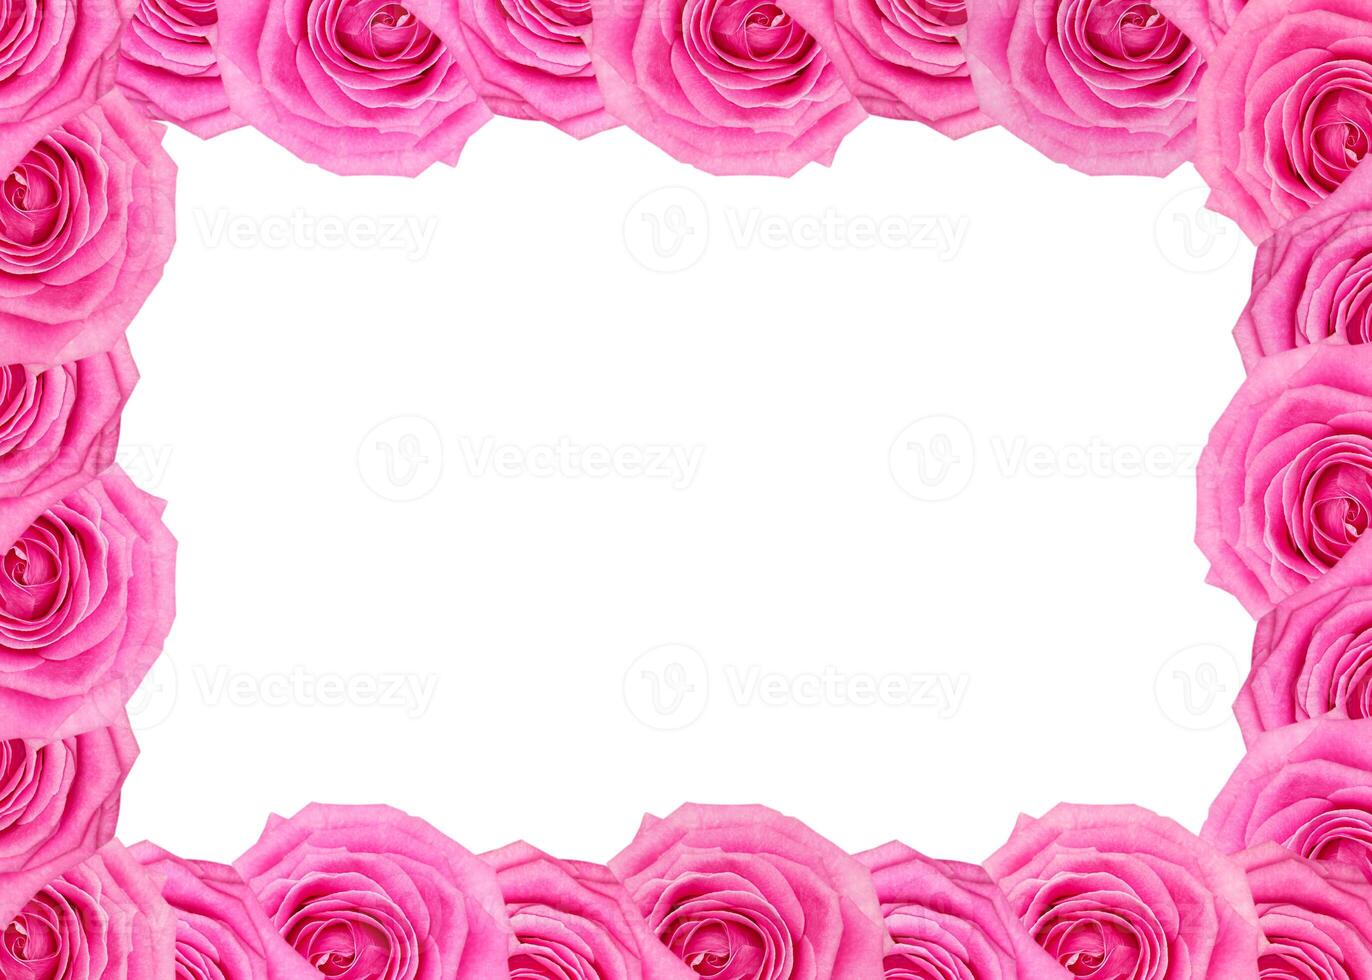 flor marco de rosado rosas modelo aislado en blanco antecedentes foto